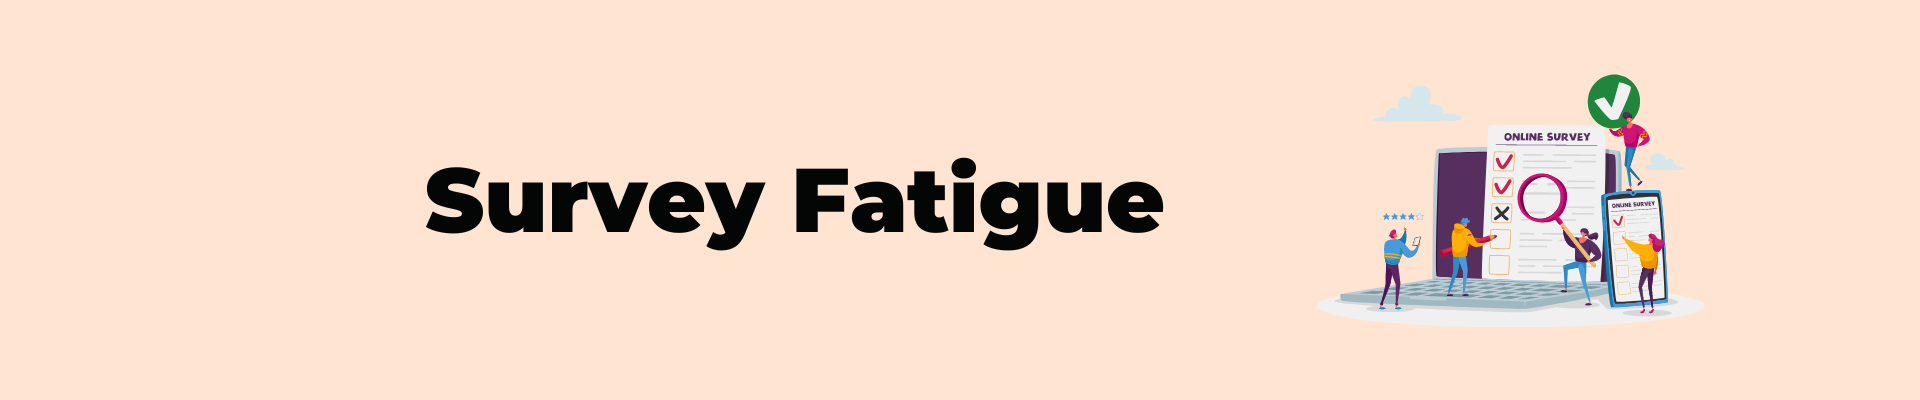 Survey Fatigue Blog Header